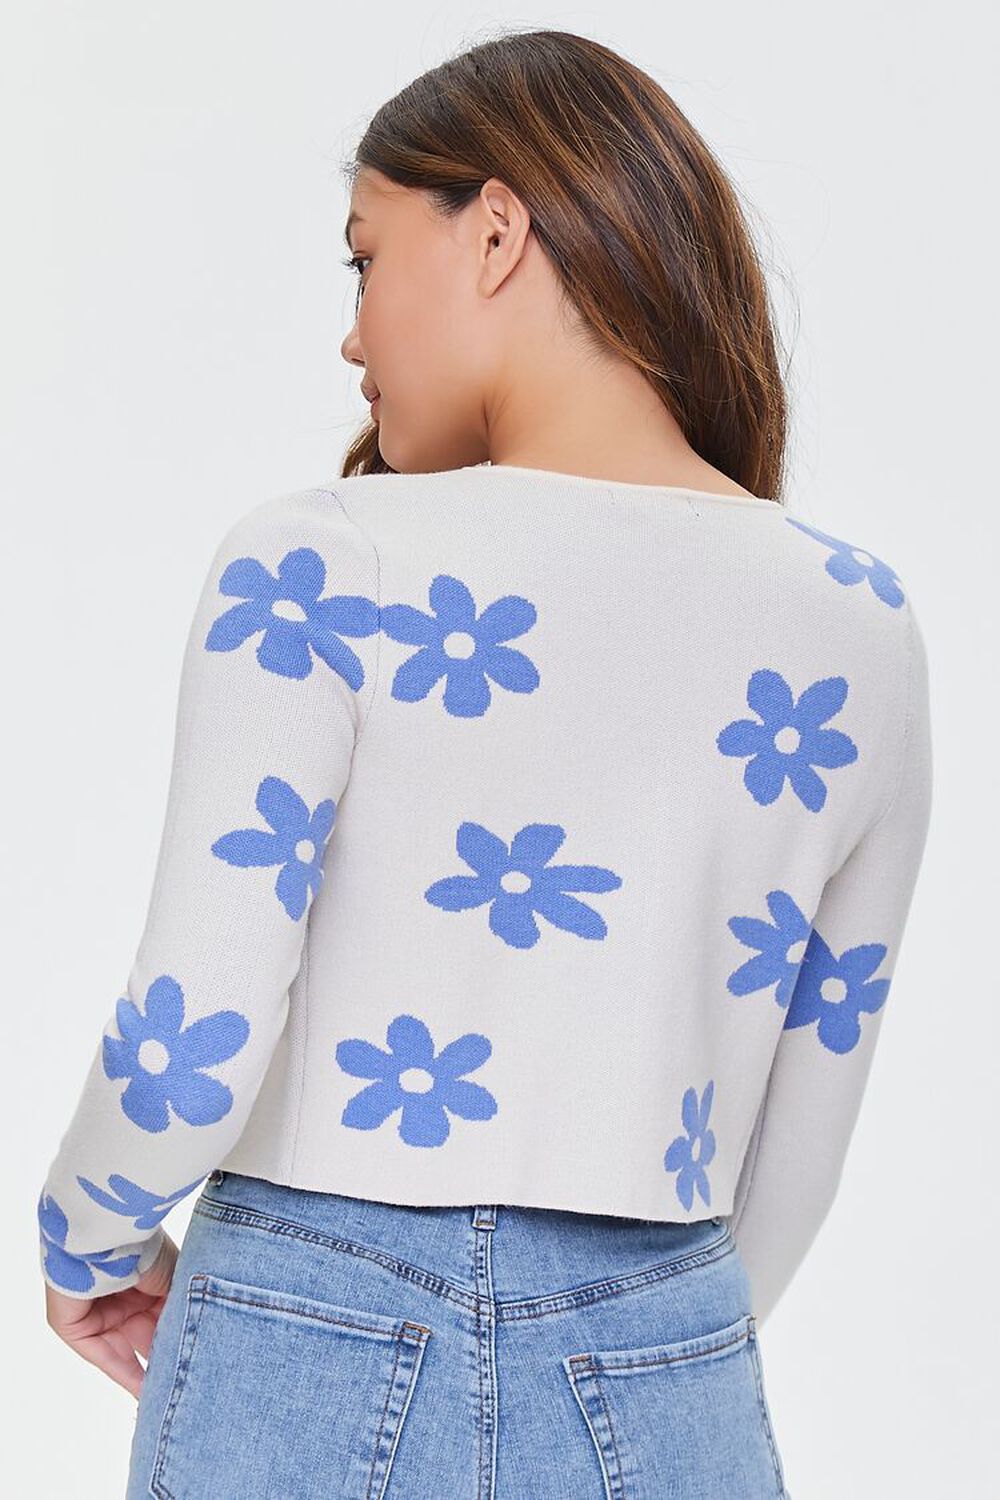 CREAM/BLUE Daisy Floral Cardigan Sweater, image 3